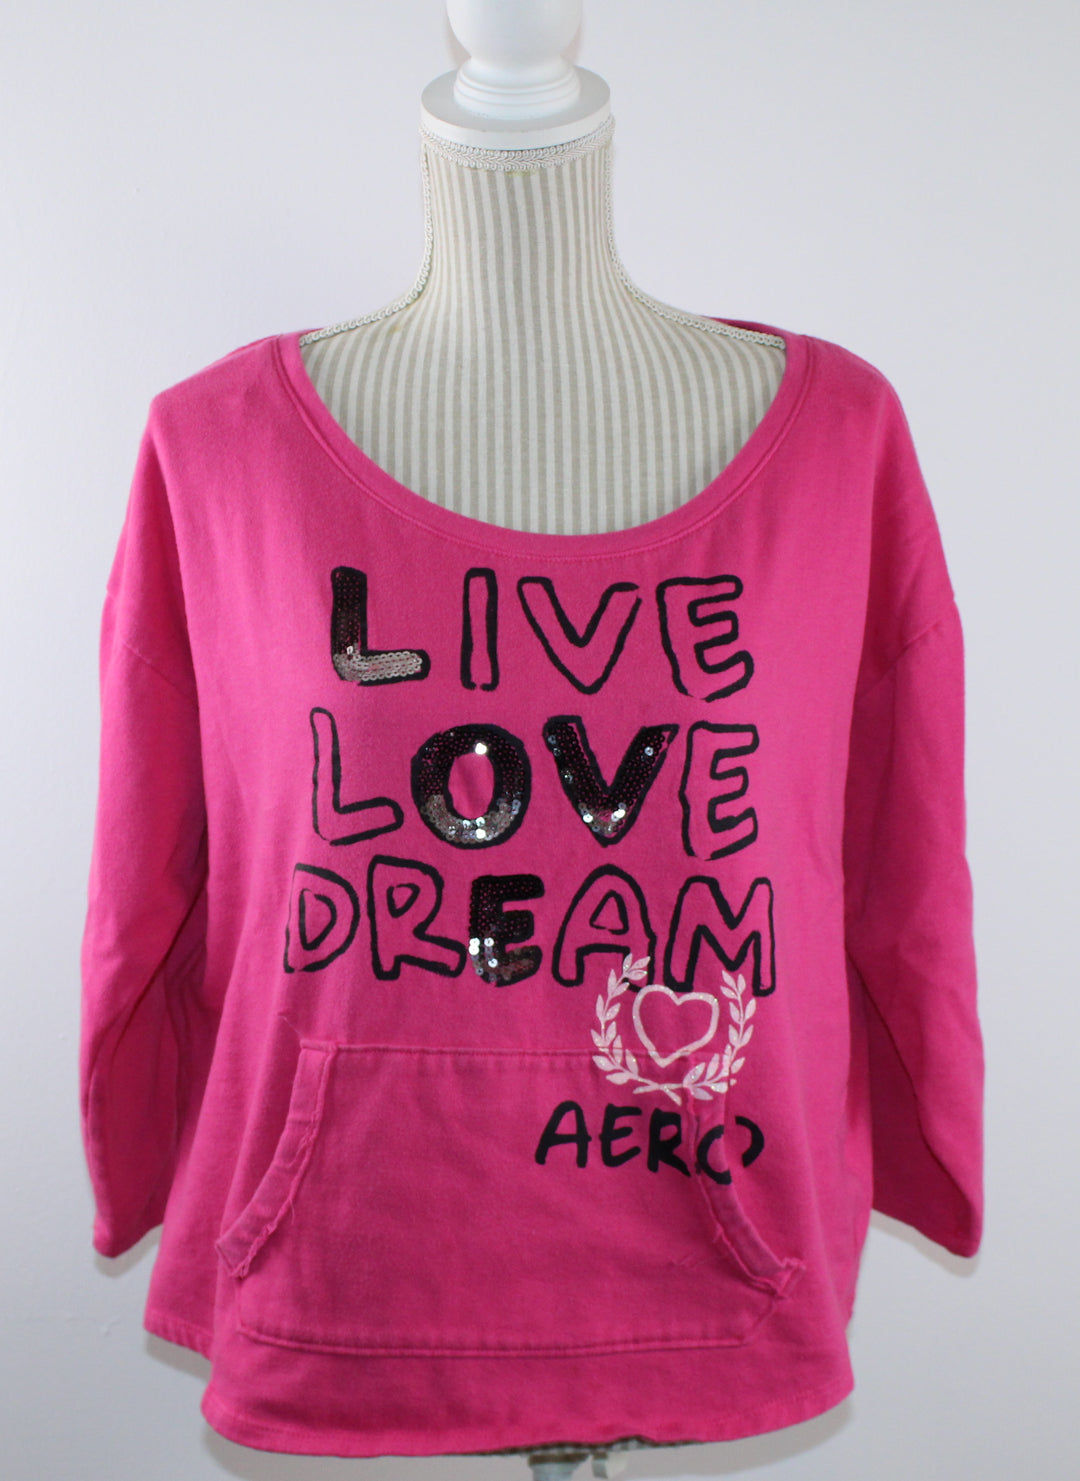 AERO PINK LIVE LOVE DREAM SWEATER LADIES SIZE XL EUC